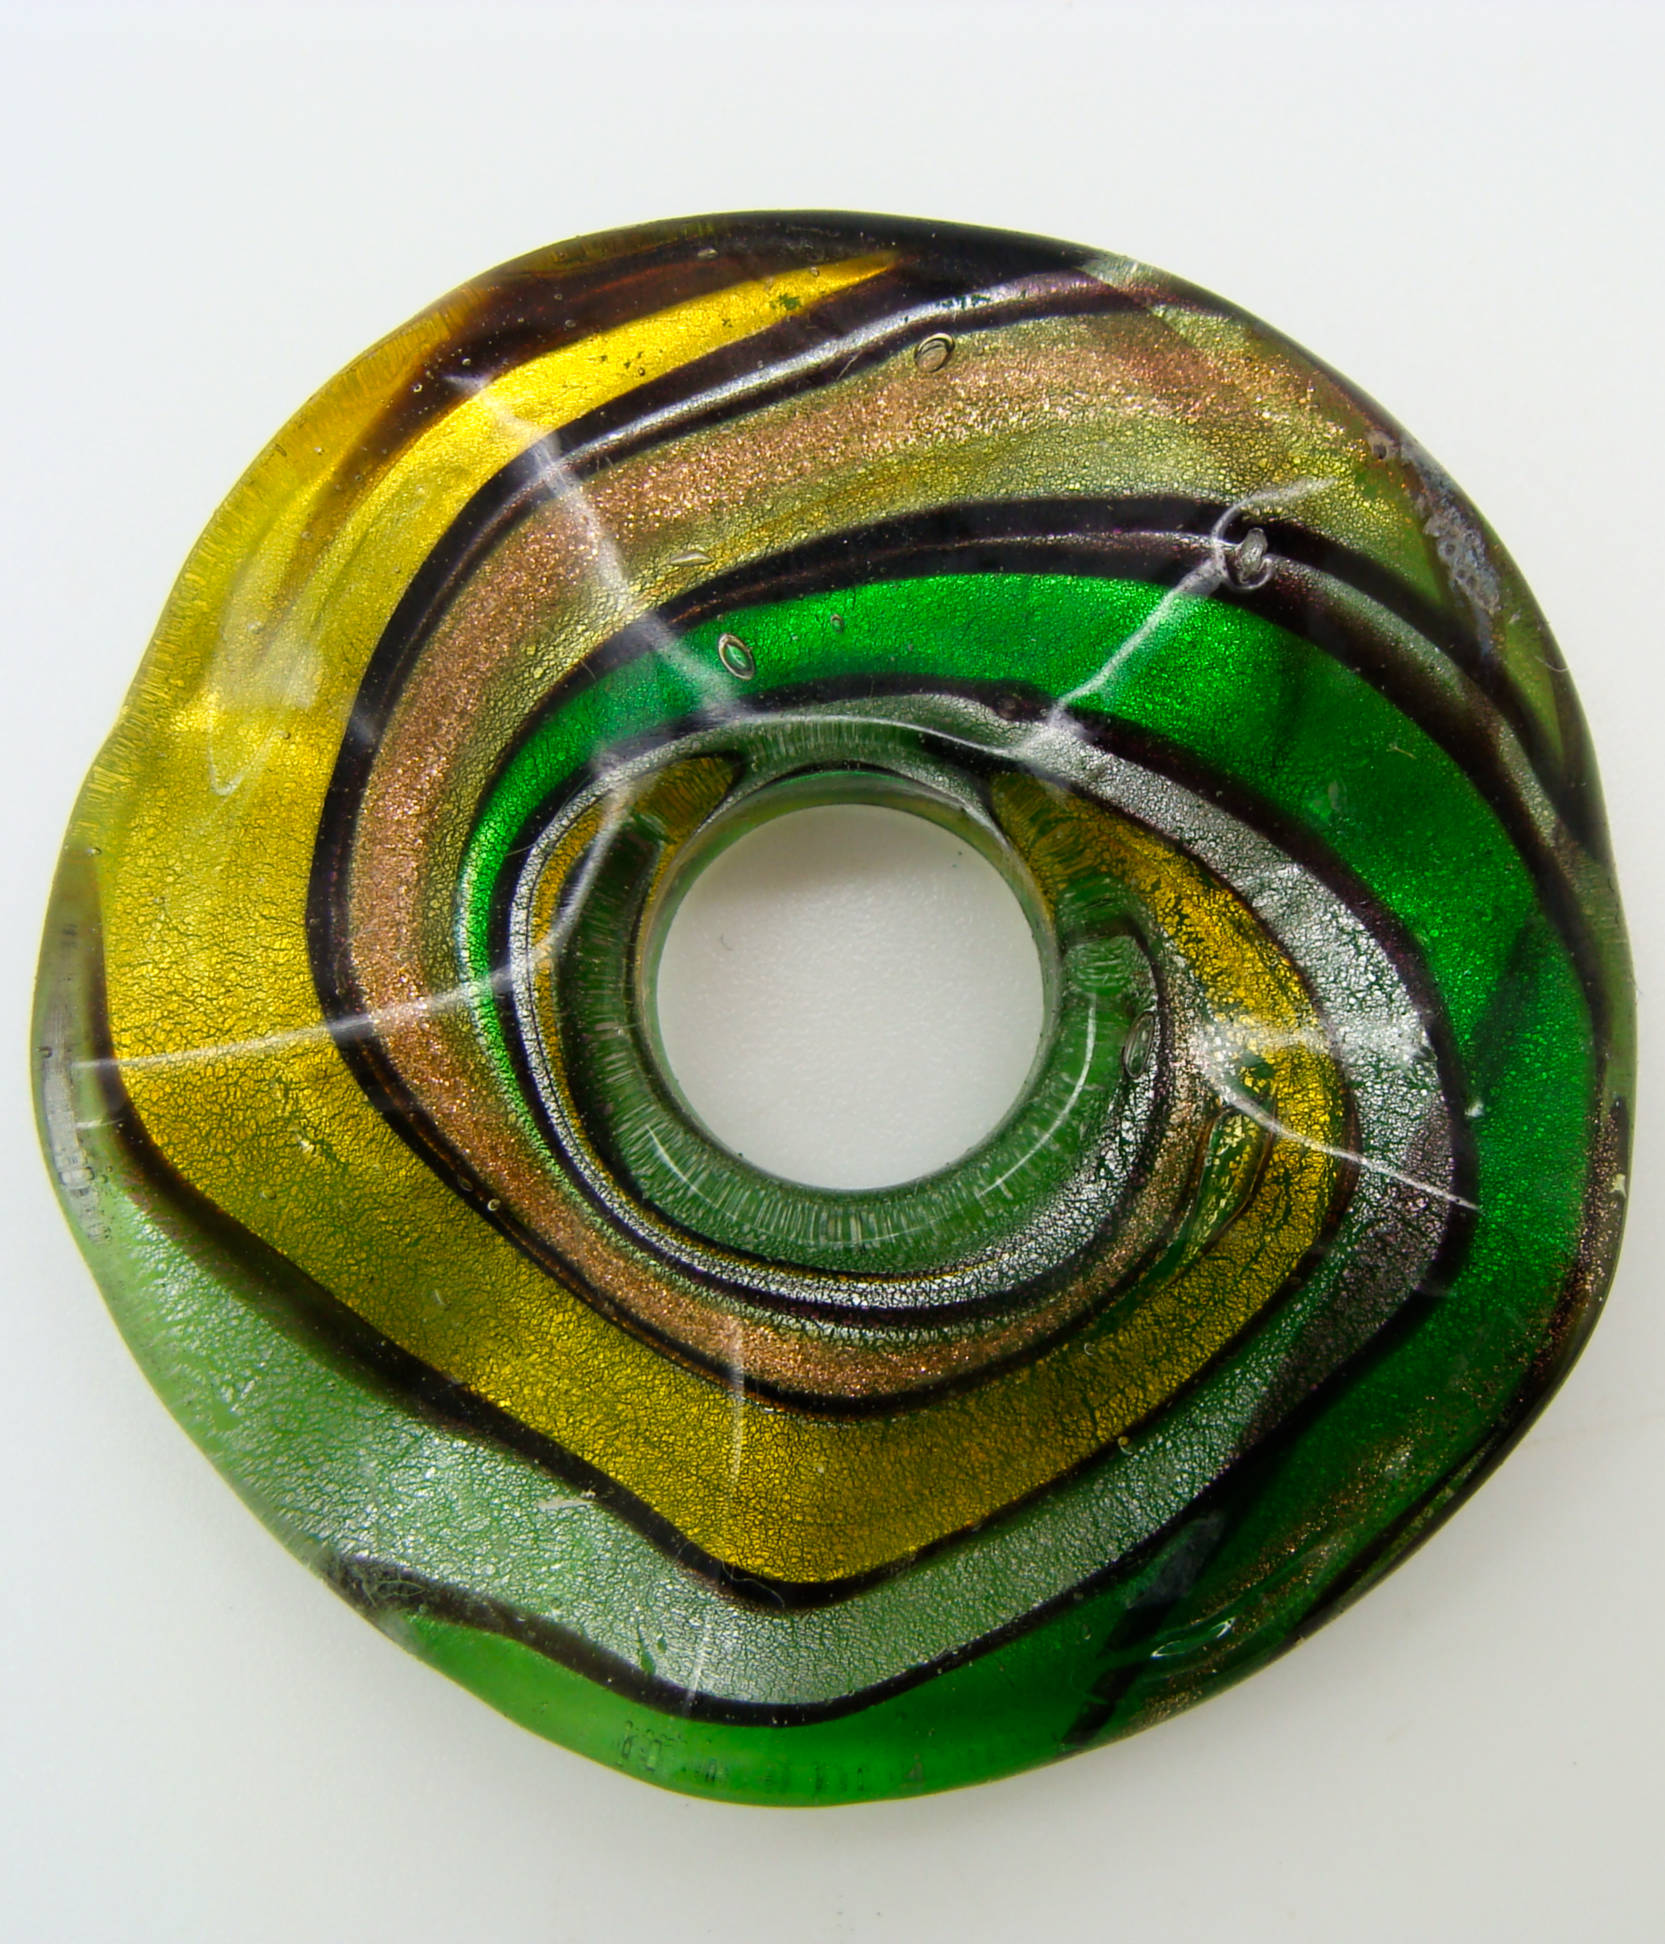 Pend-291-3 pendentif donut ondule vert rond